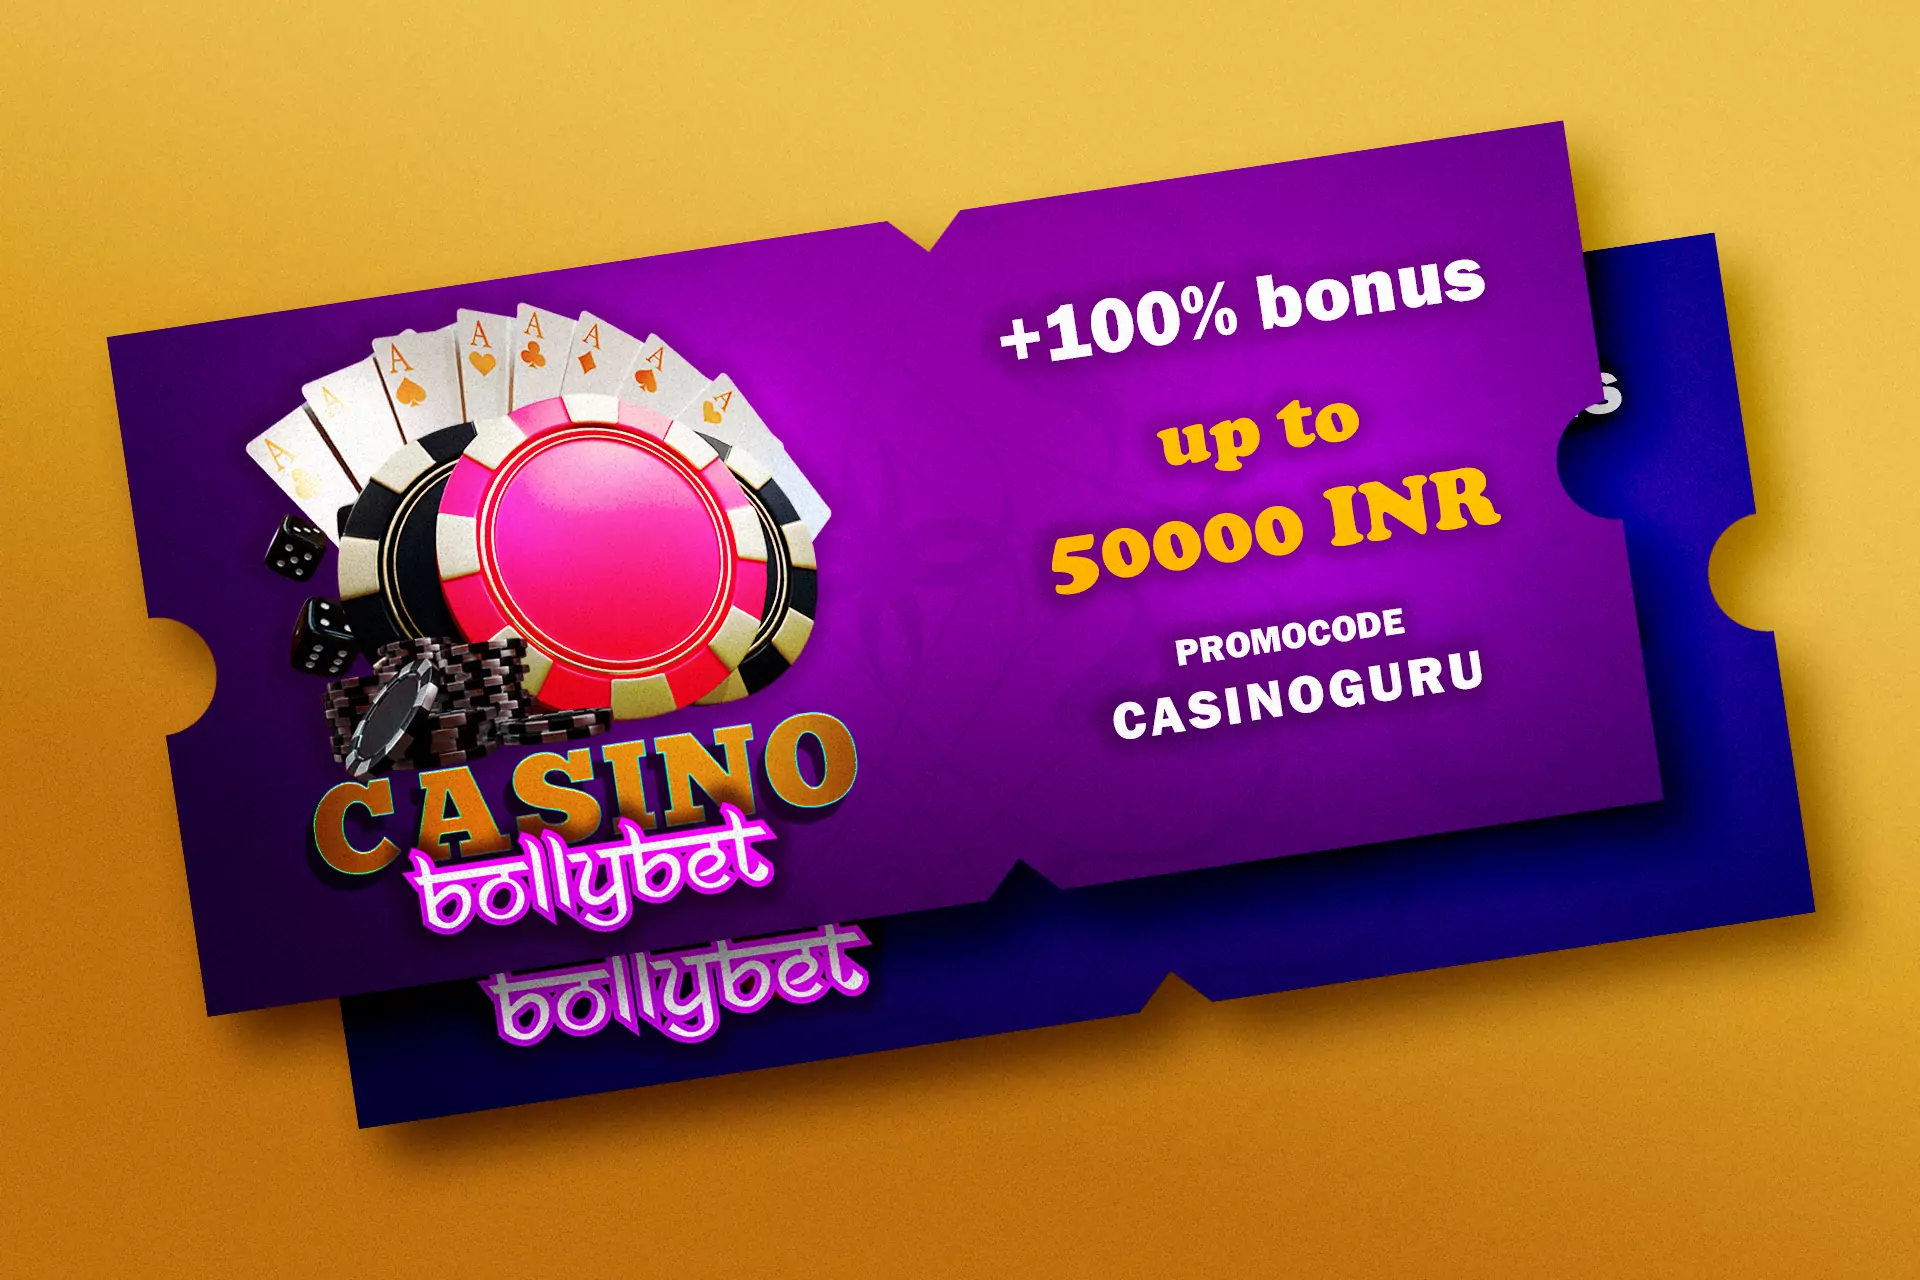 Use promo code CASINOGURU to get an INR 50,000 bonus on your first deposit to play casino games.